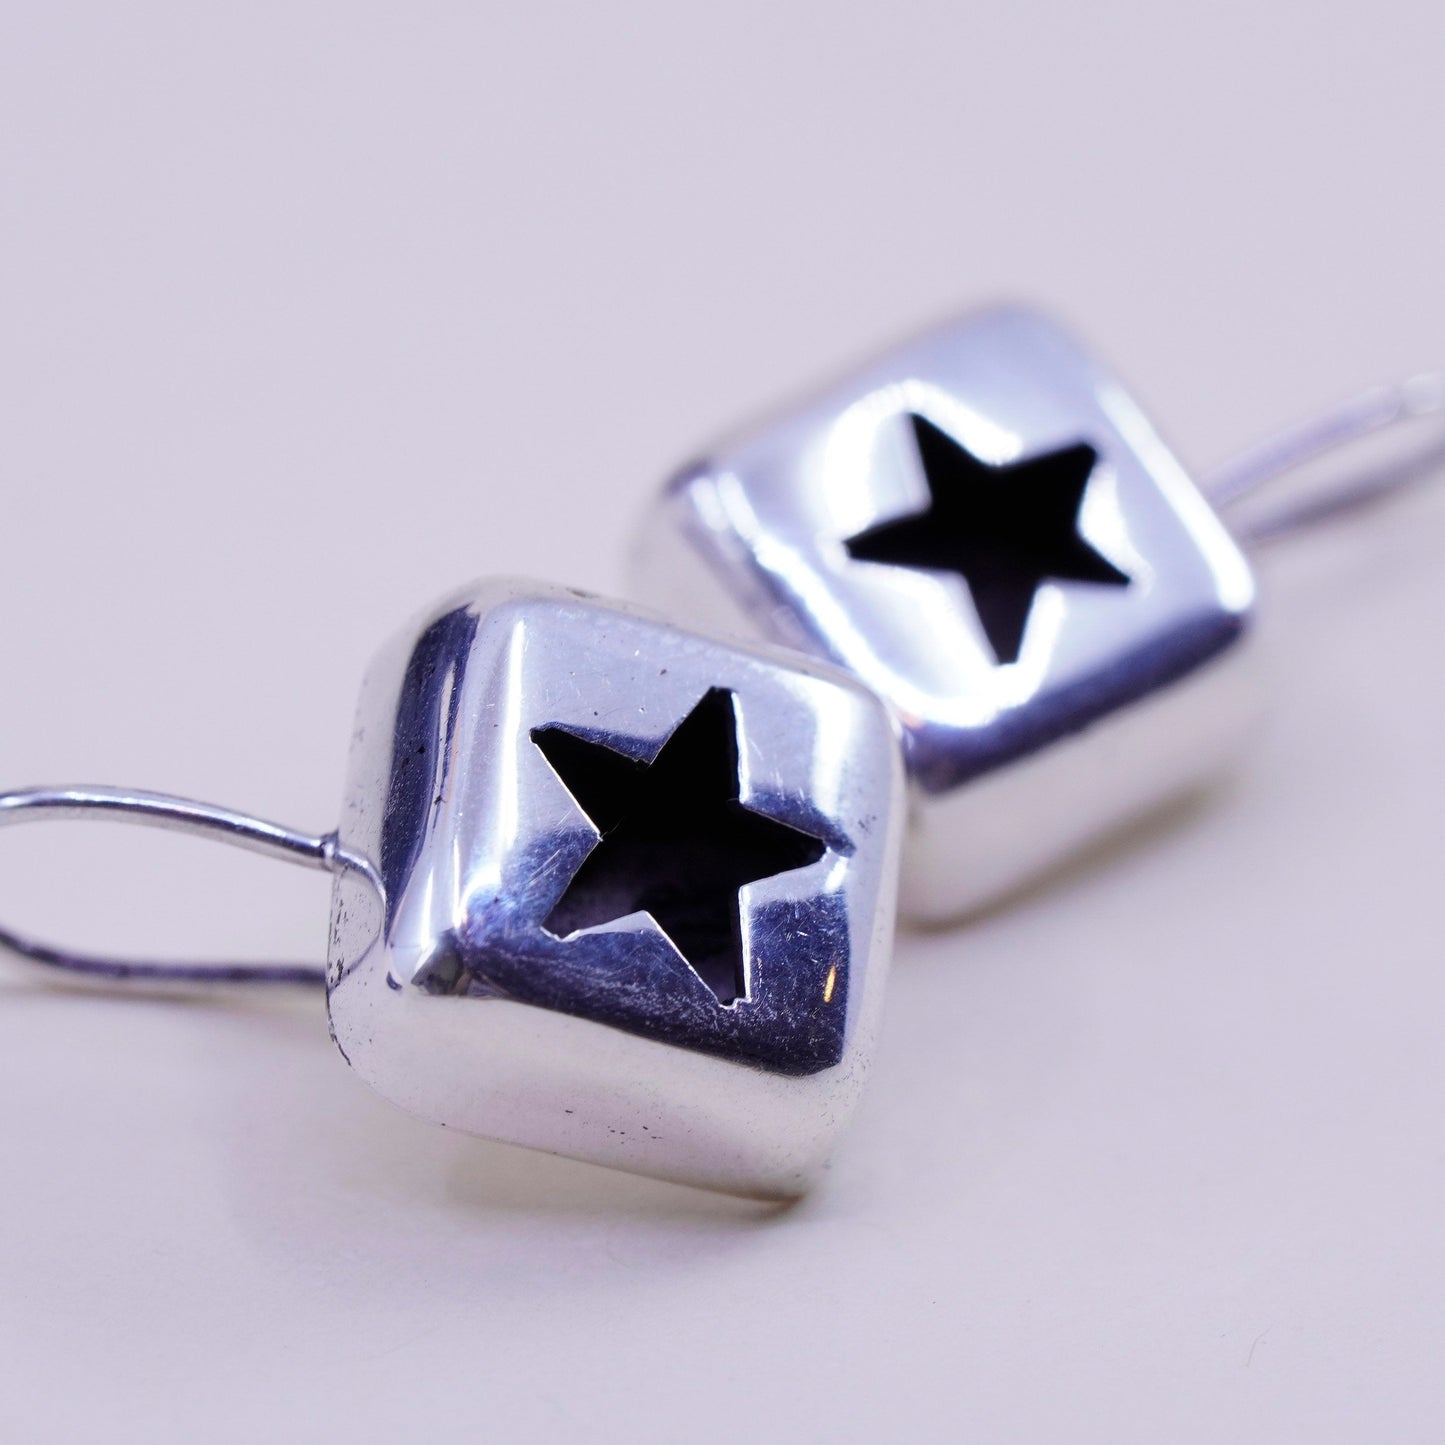 Vintage sterling silver handmade modern earrings, 925 star drops